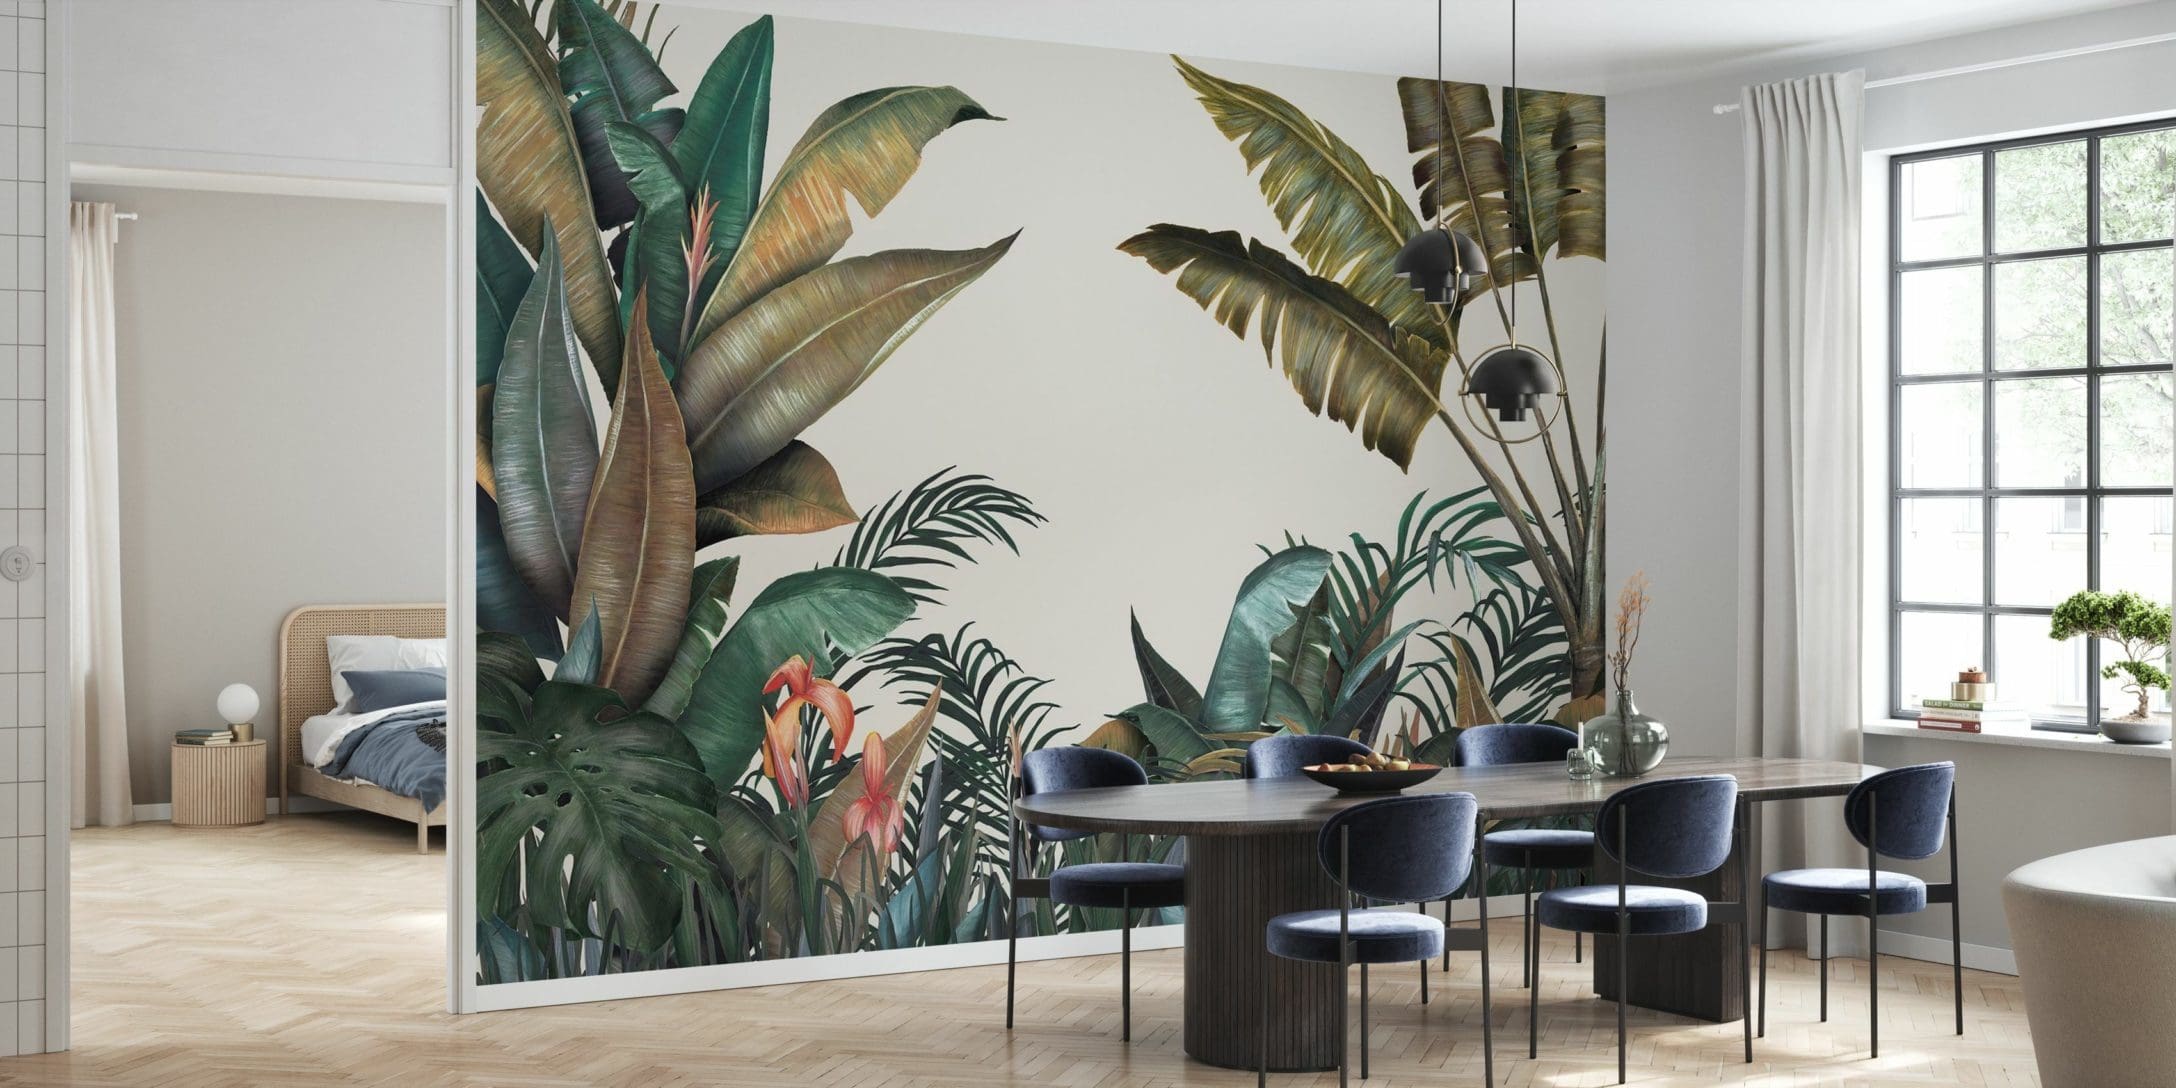 Tropical wallpaper ideas